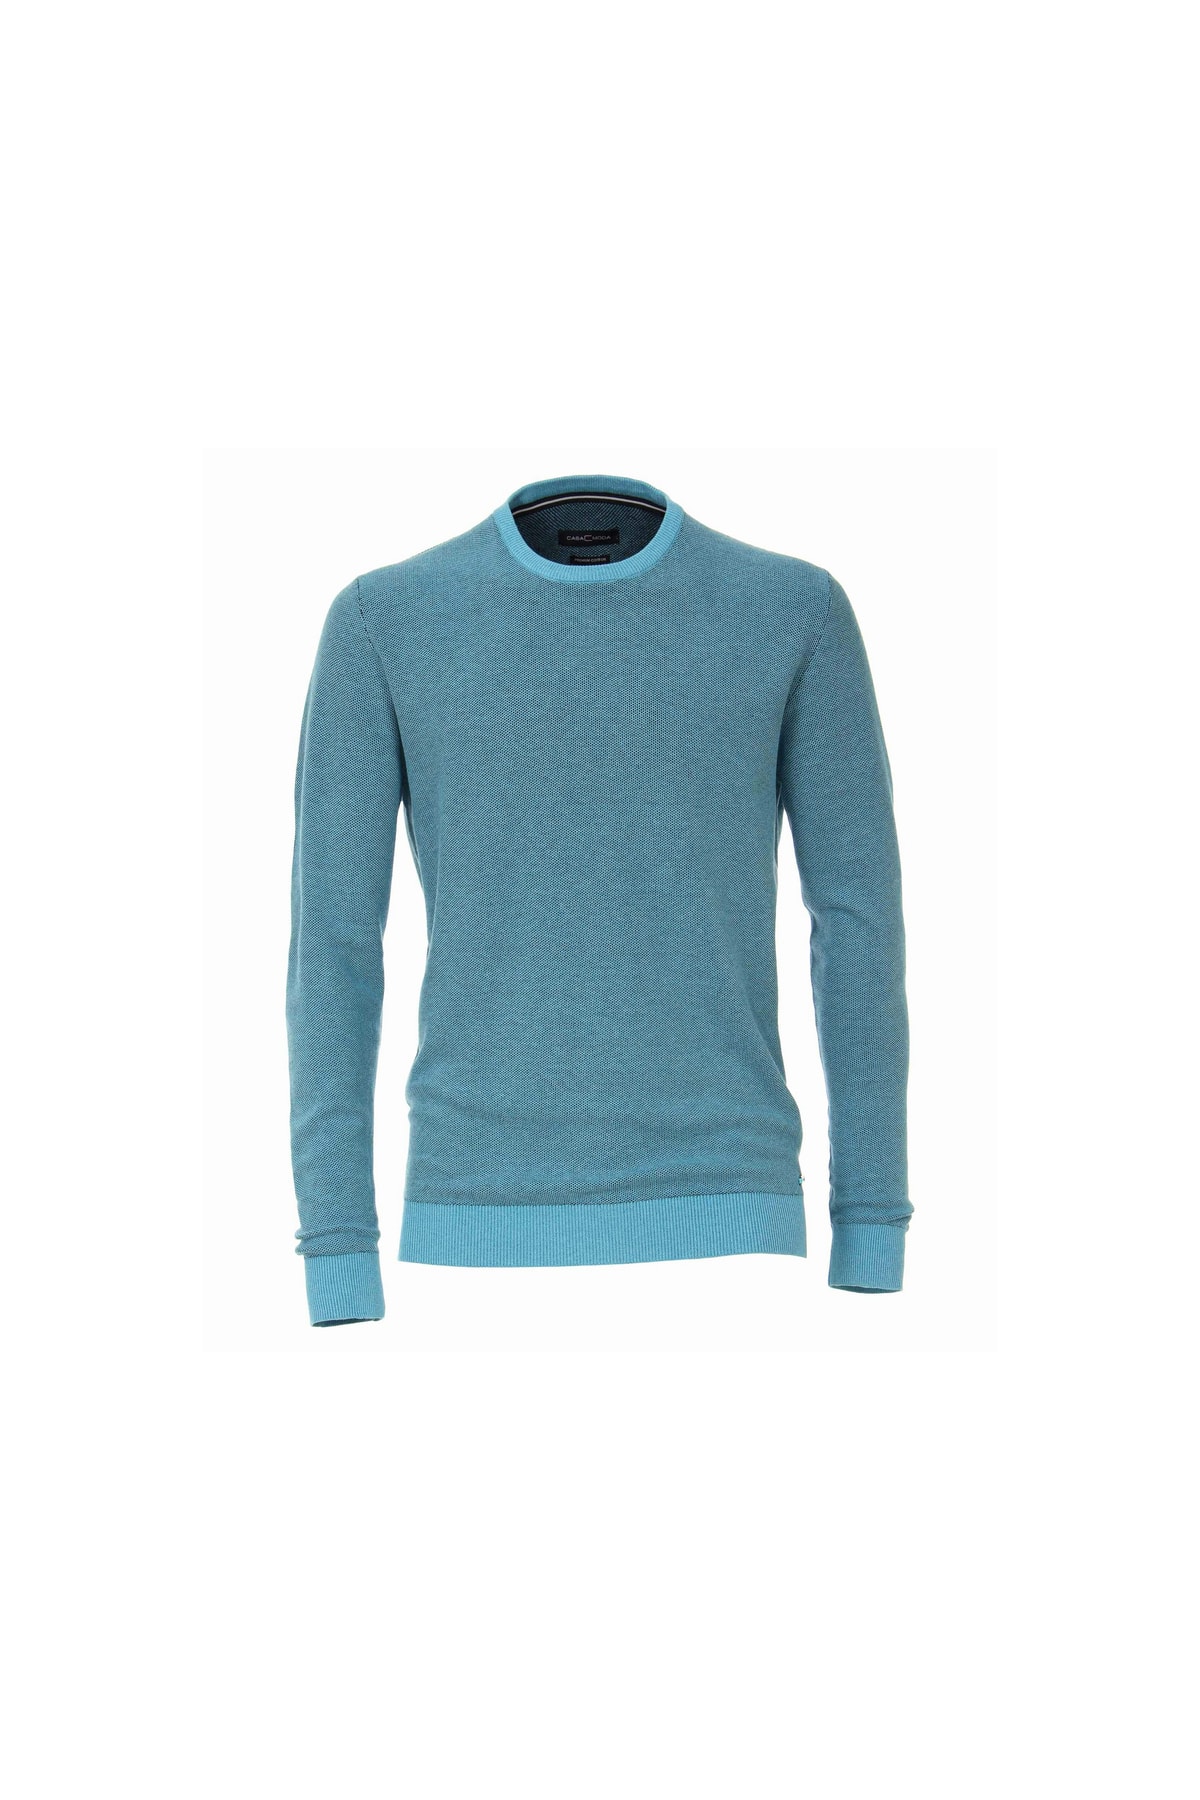 VENTI Pullover Blau Regular Fit Fast ausverkauft